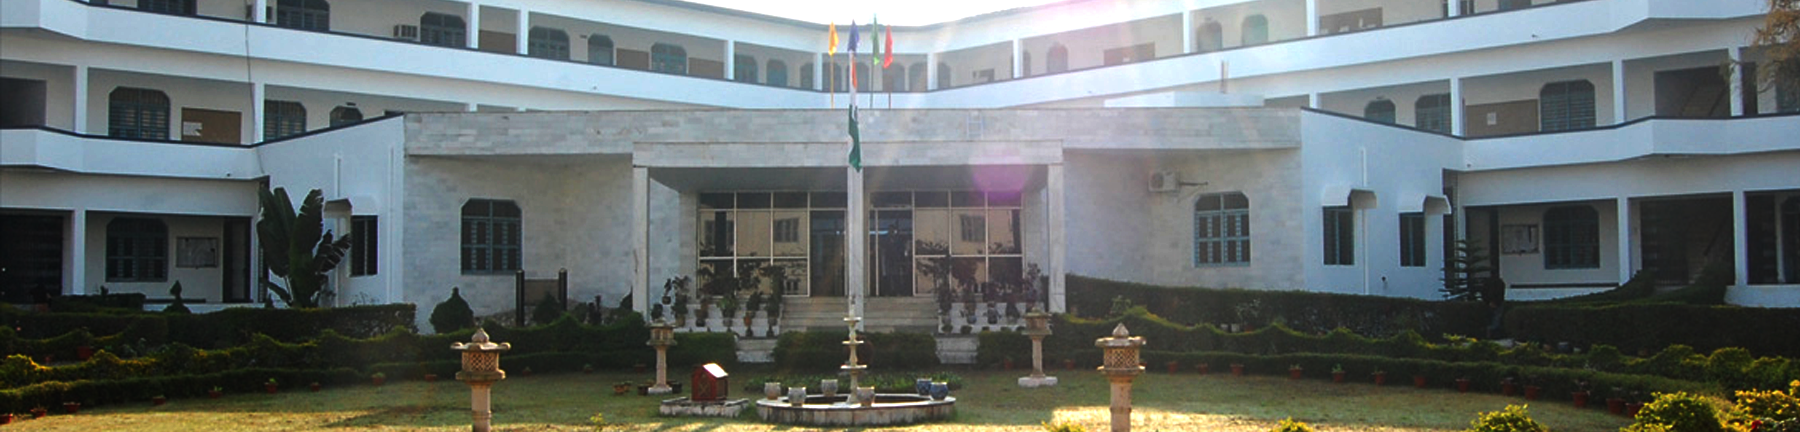 Amrapali Institute of Technology and Sciences, Haldwani Image